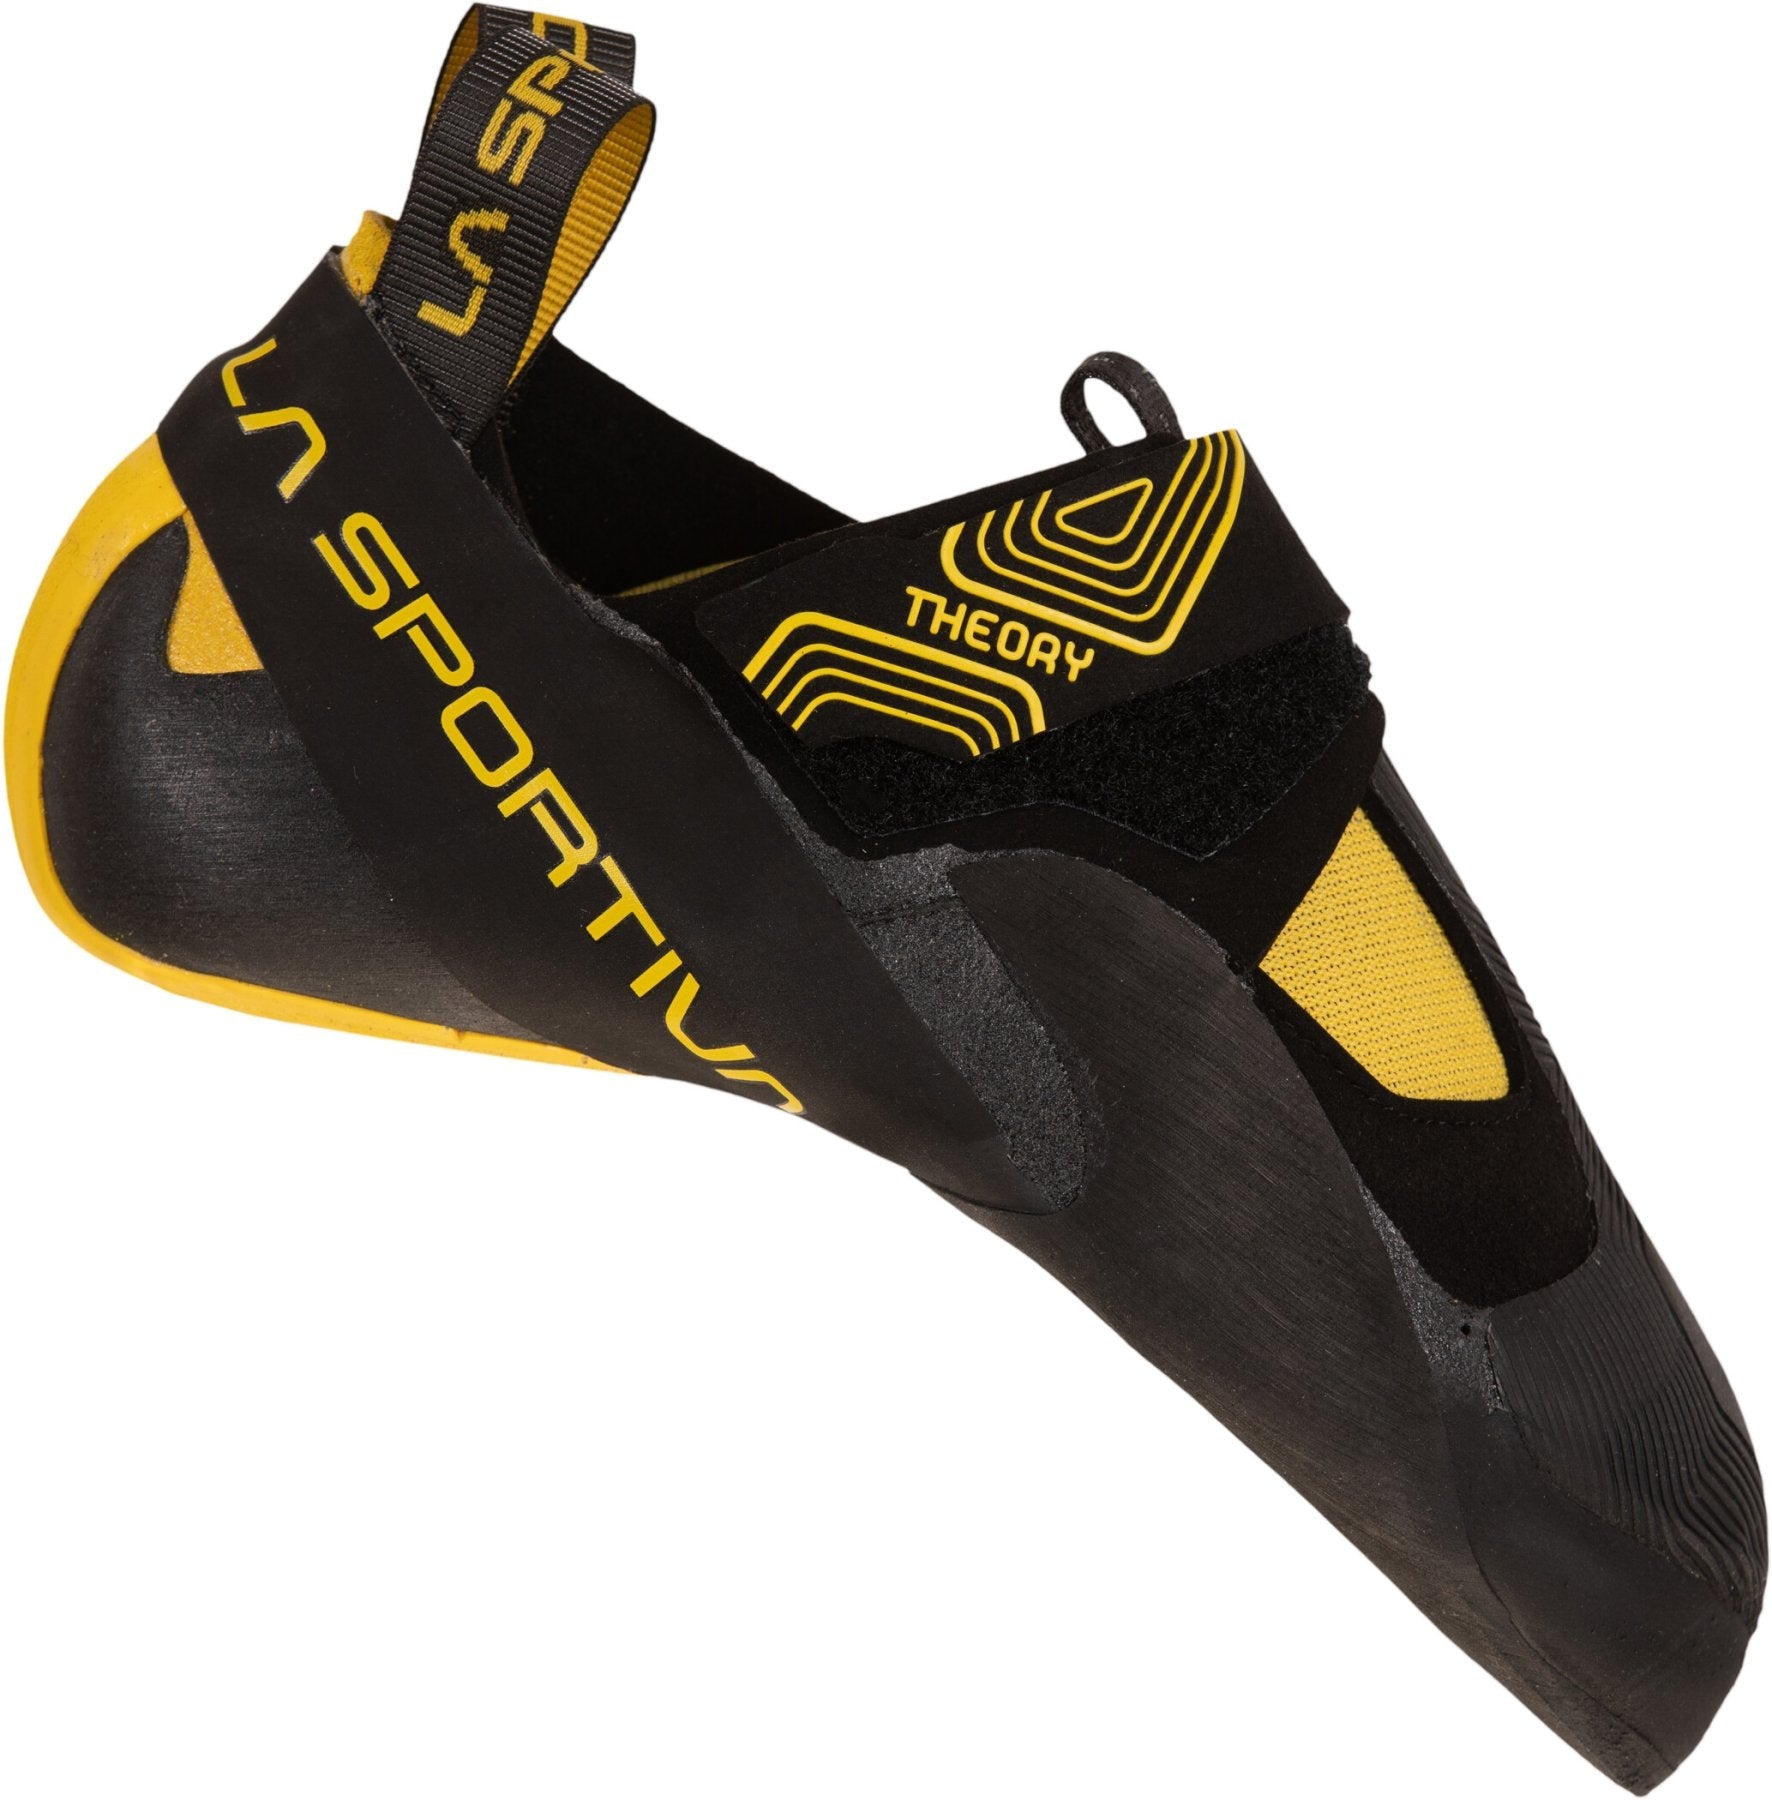 Theory men's - black/yellow, climbing shoes